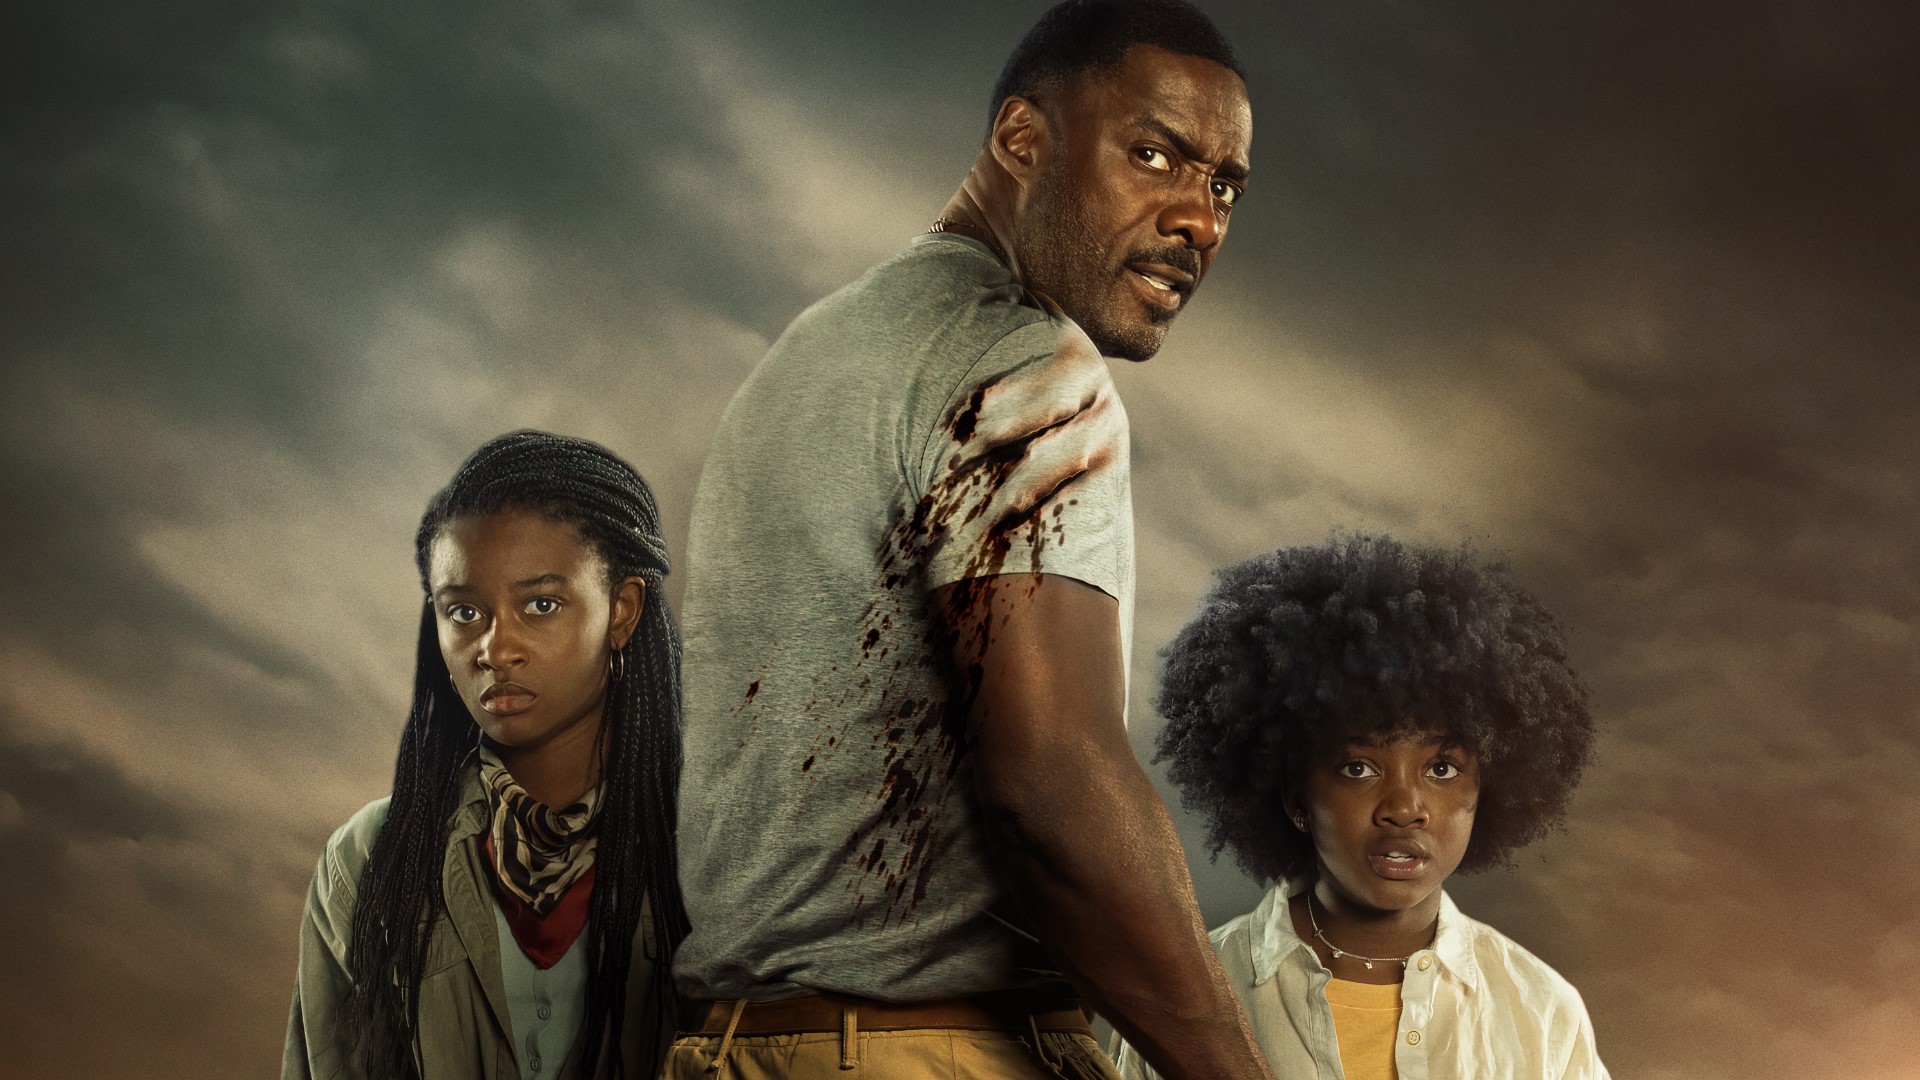 Idris Elba plays against type in new thriller 'Beast' | king5.com